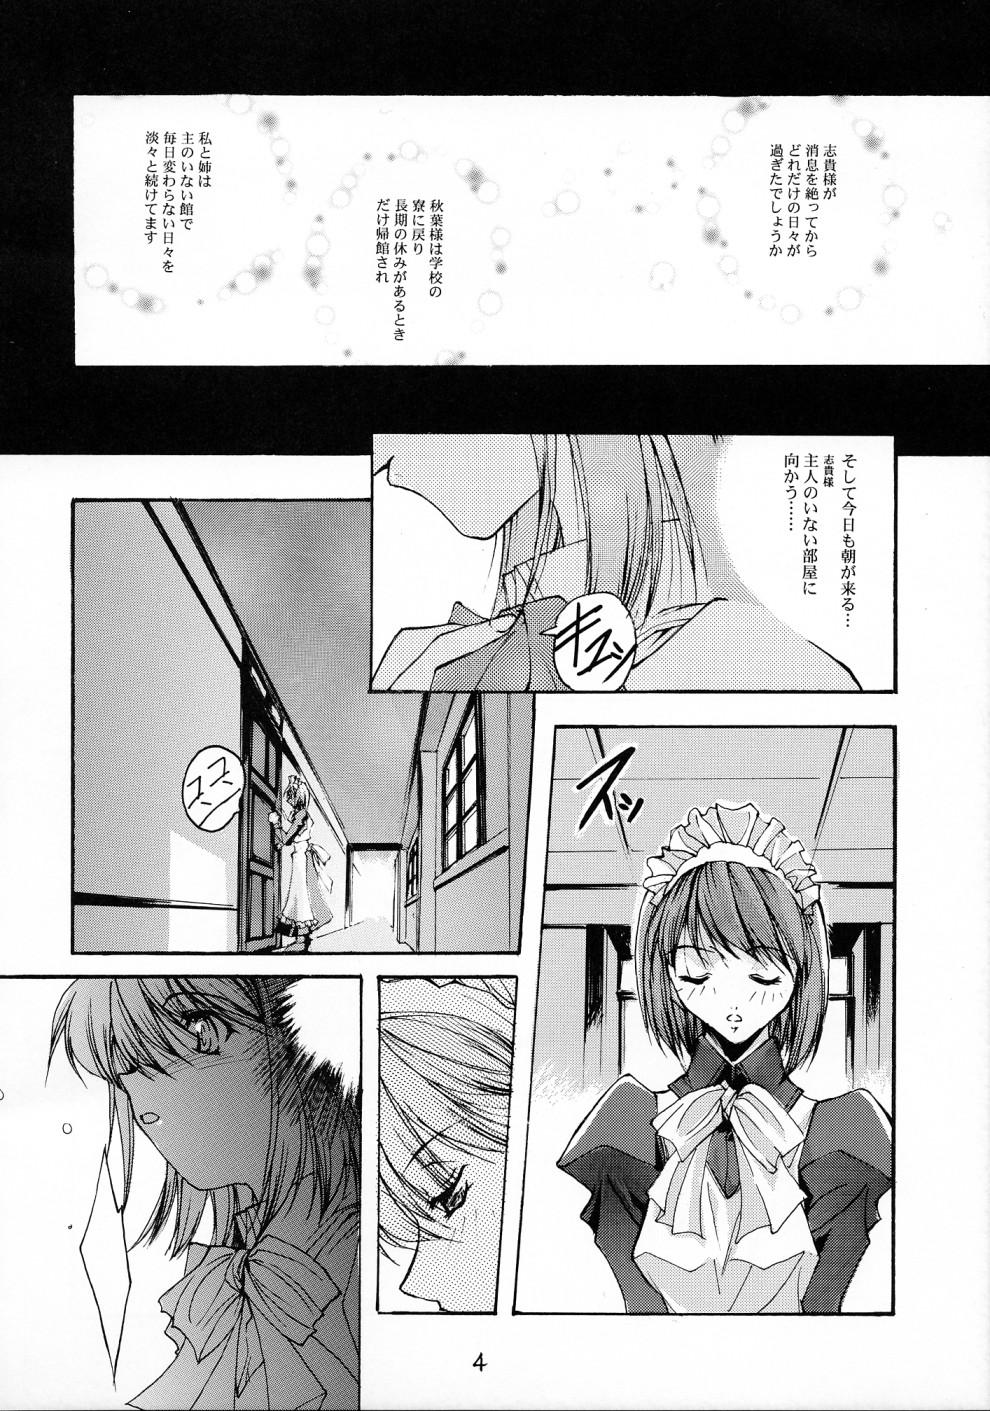 Facebook Gekka Shoujo 2 - Tsukihime Humiliation Pov - Page 3